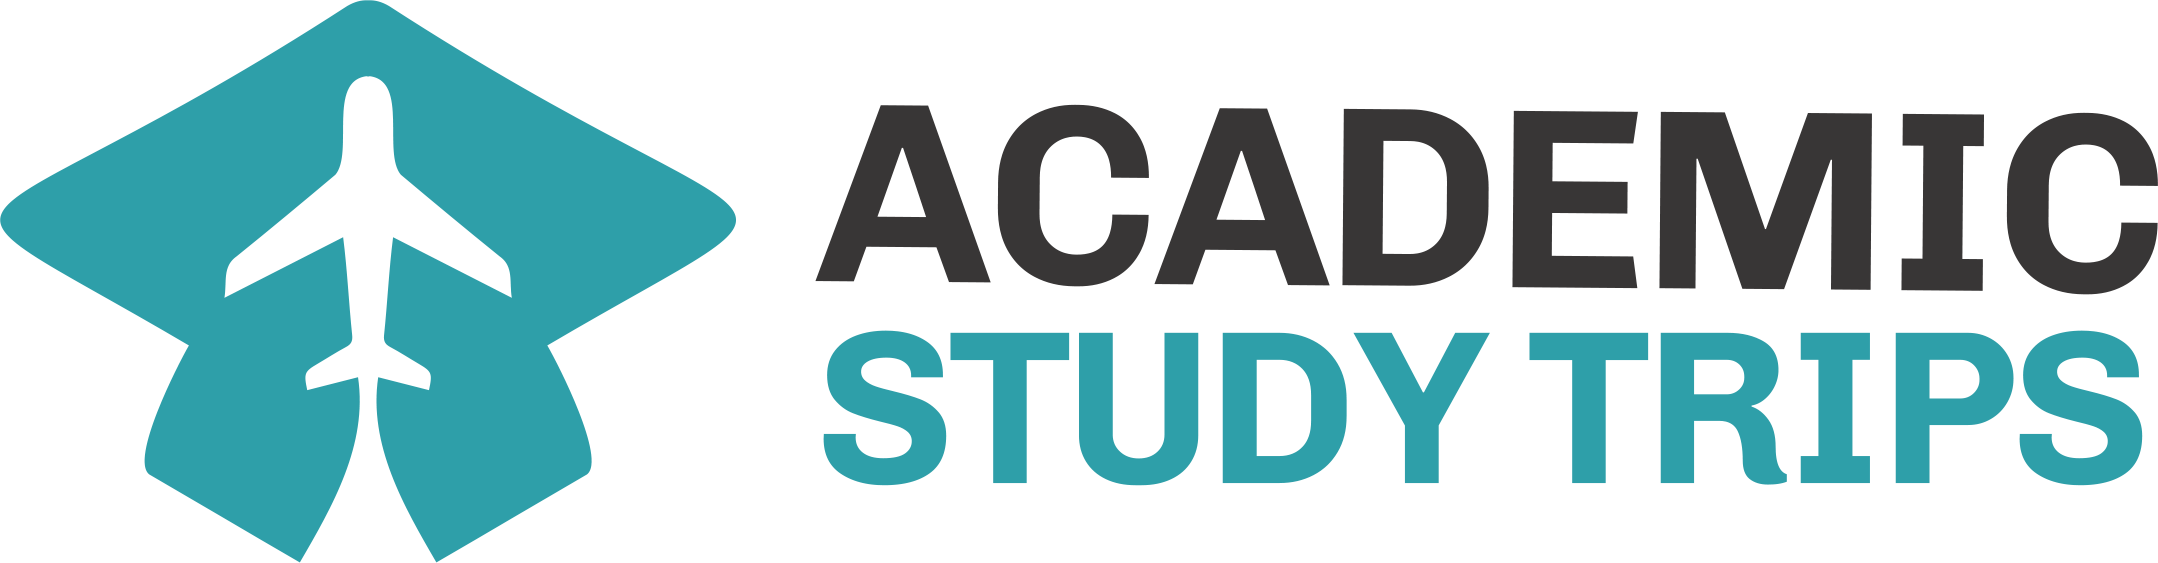 Academic Study Trips Logo